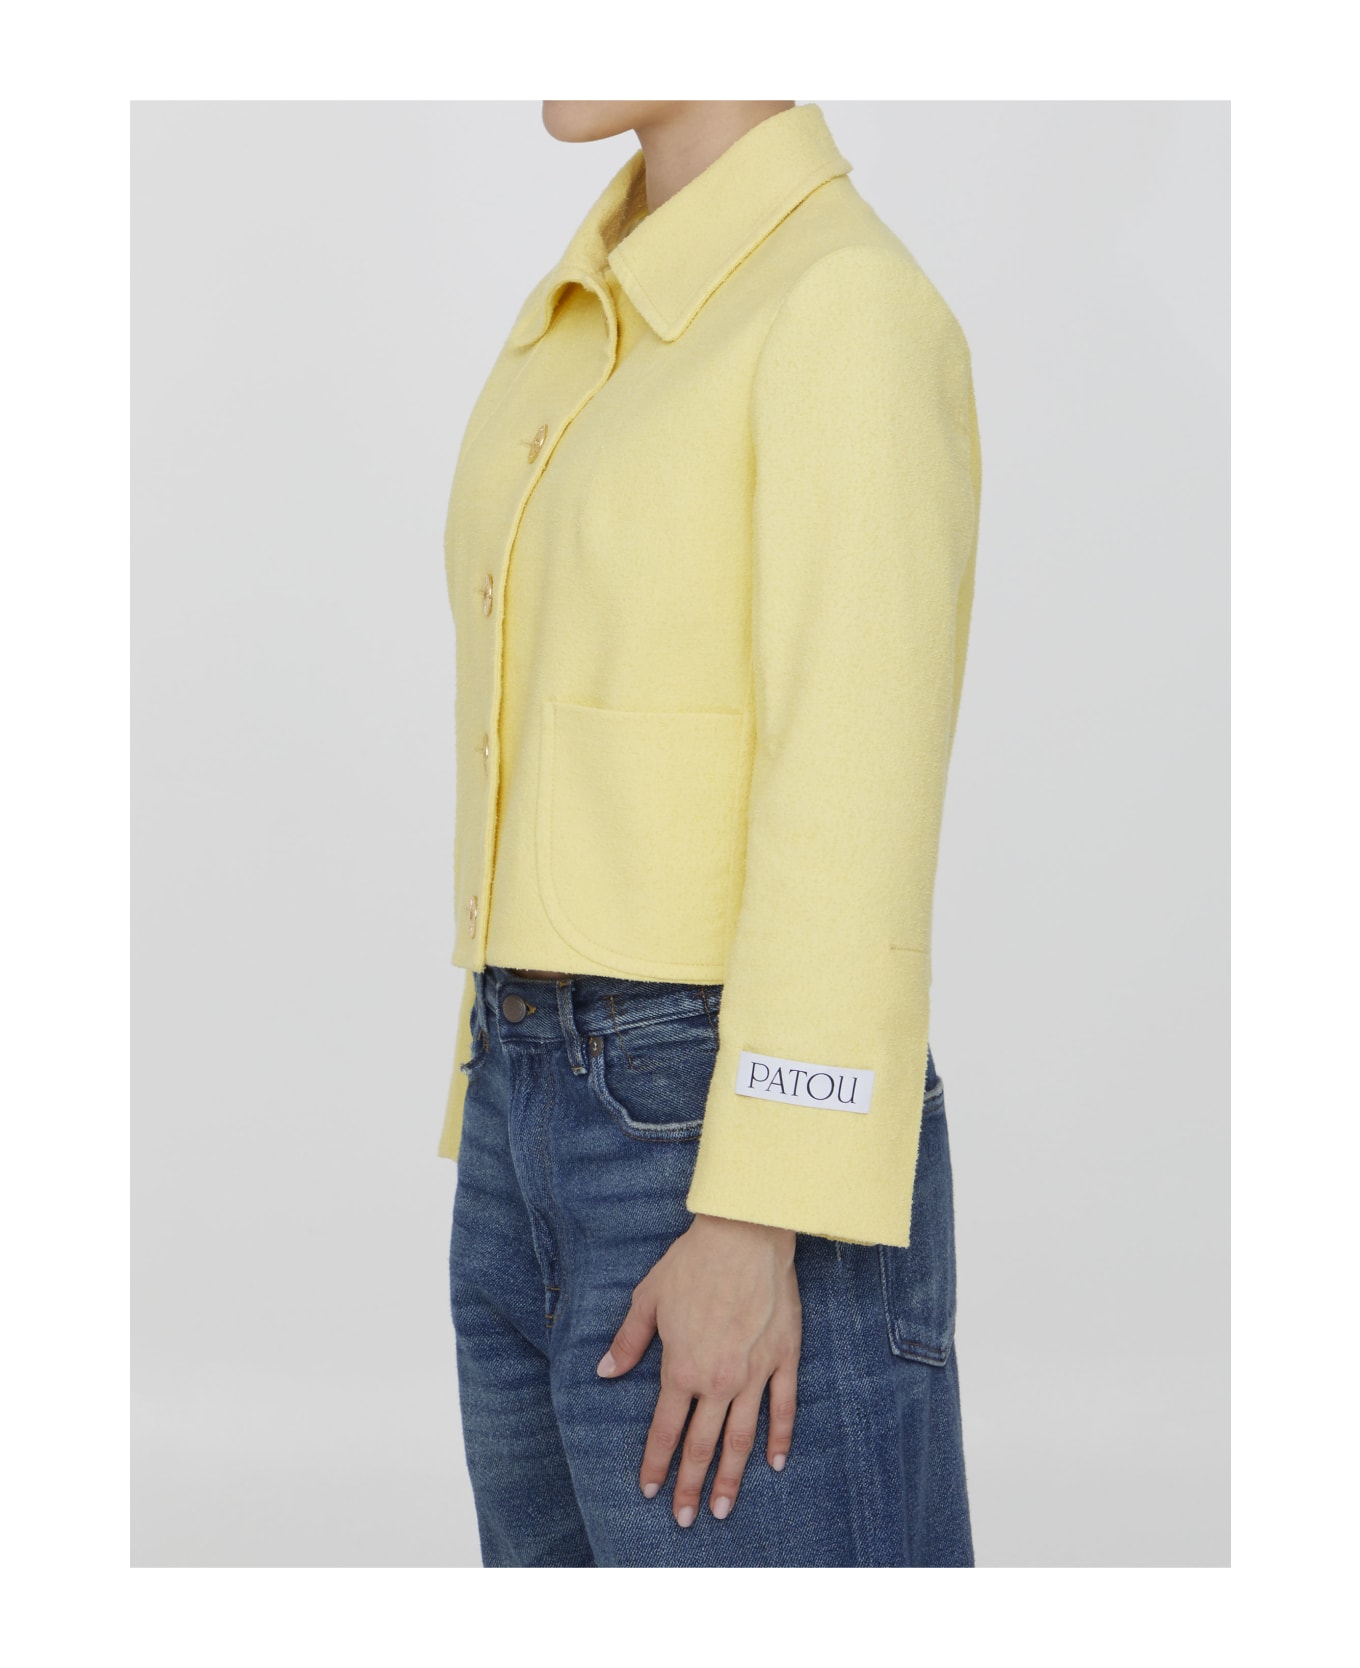 Patou Yellow Tweed Short Jacket - Yellow